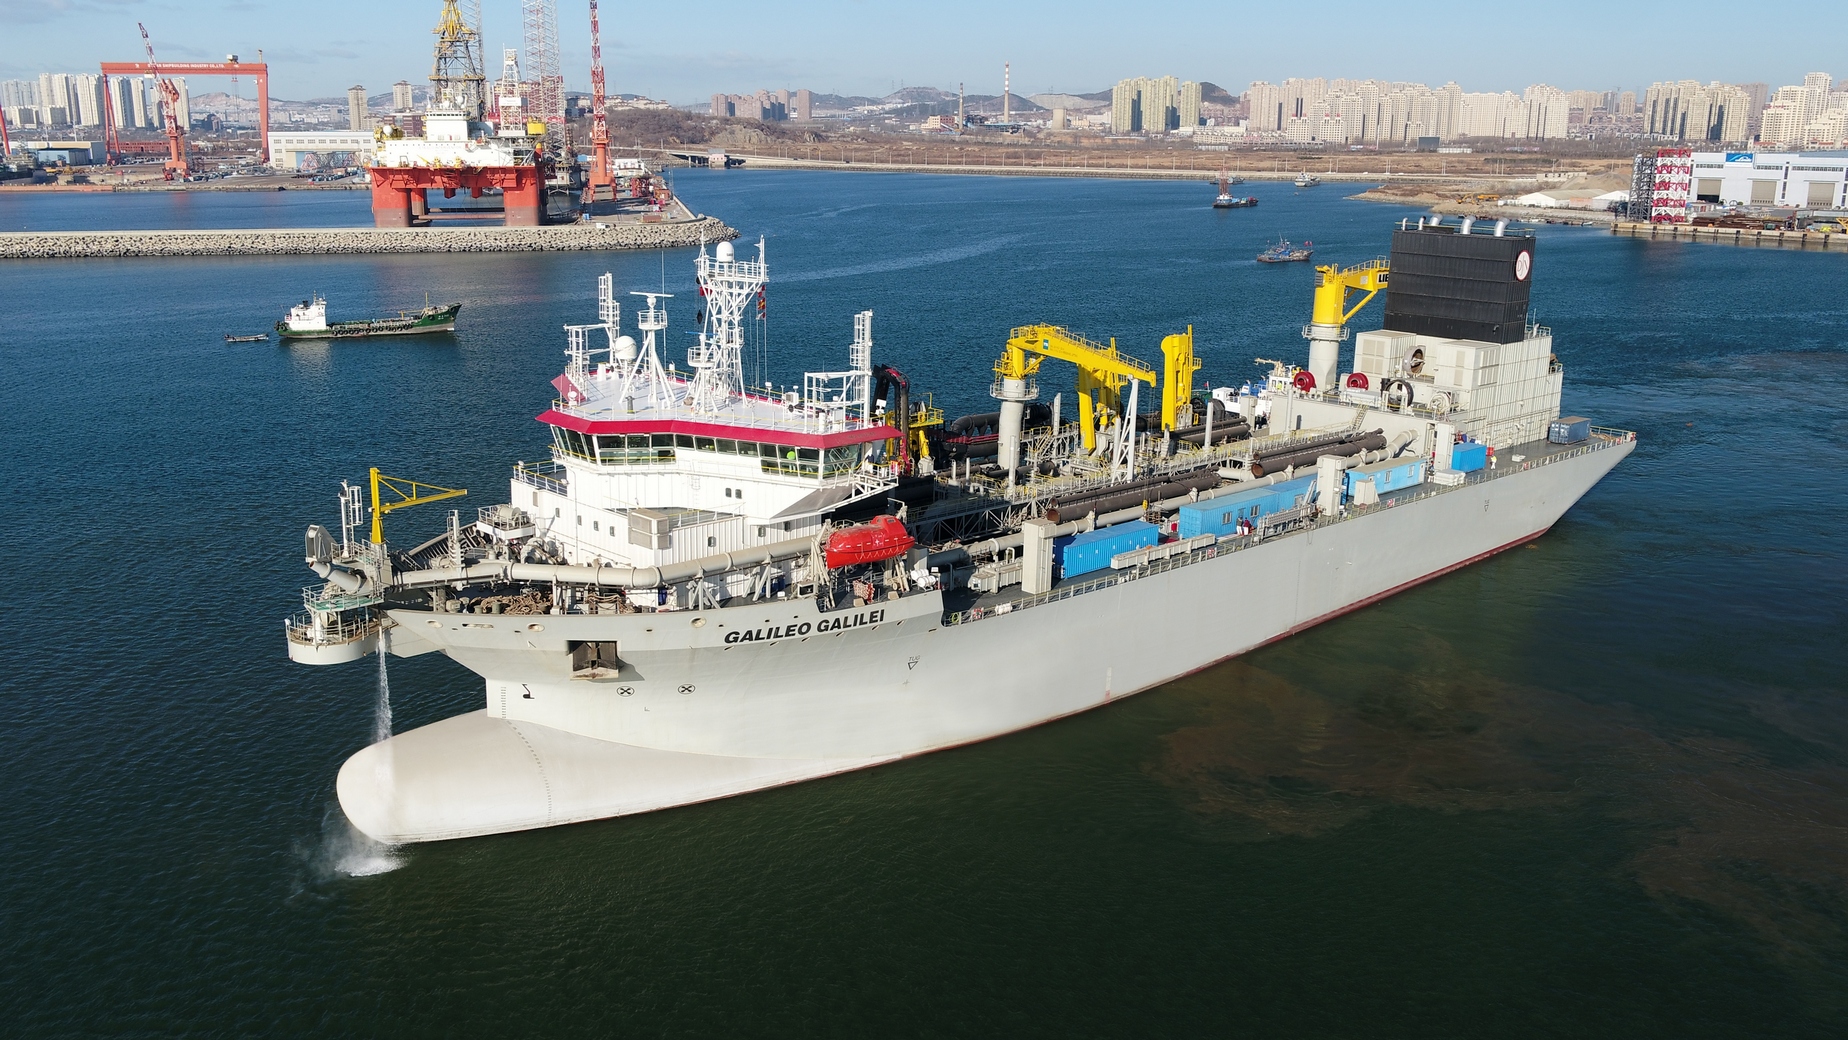 Jan De Nul adds two new dredgers to its fleet